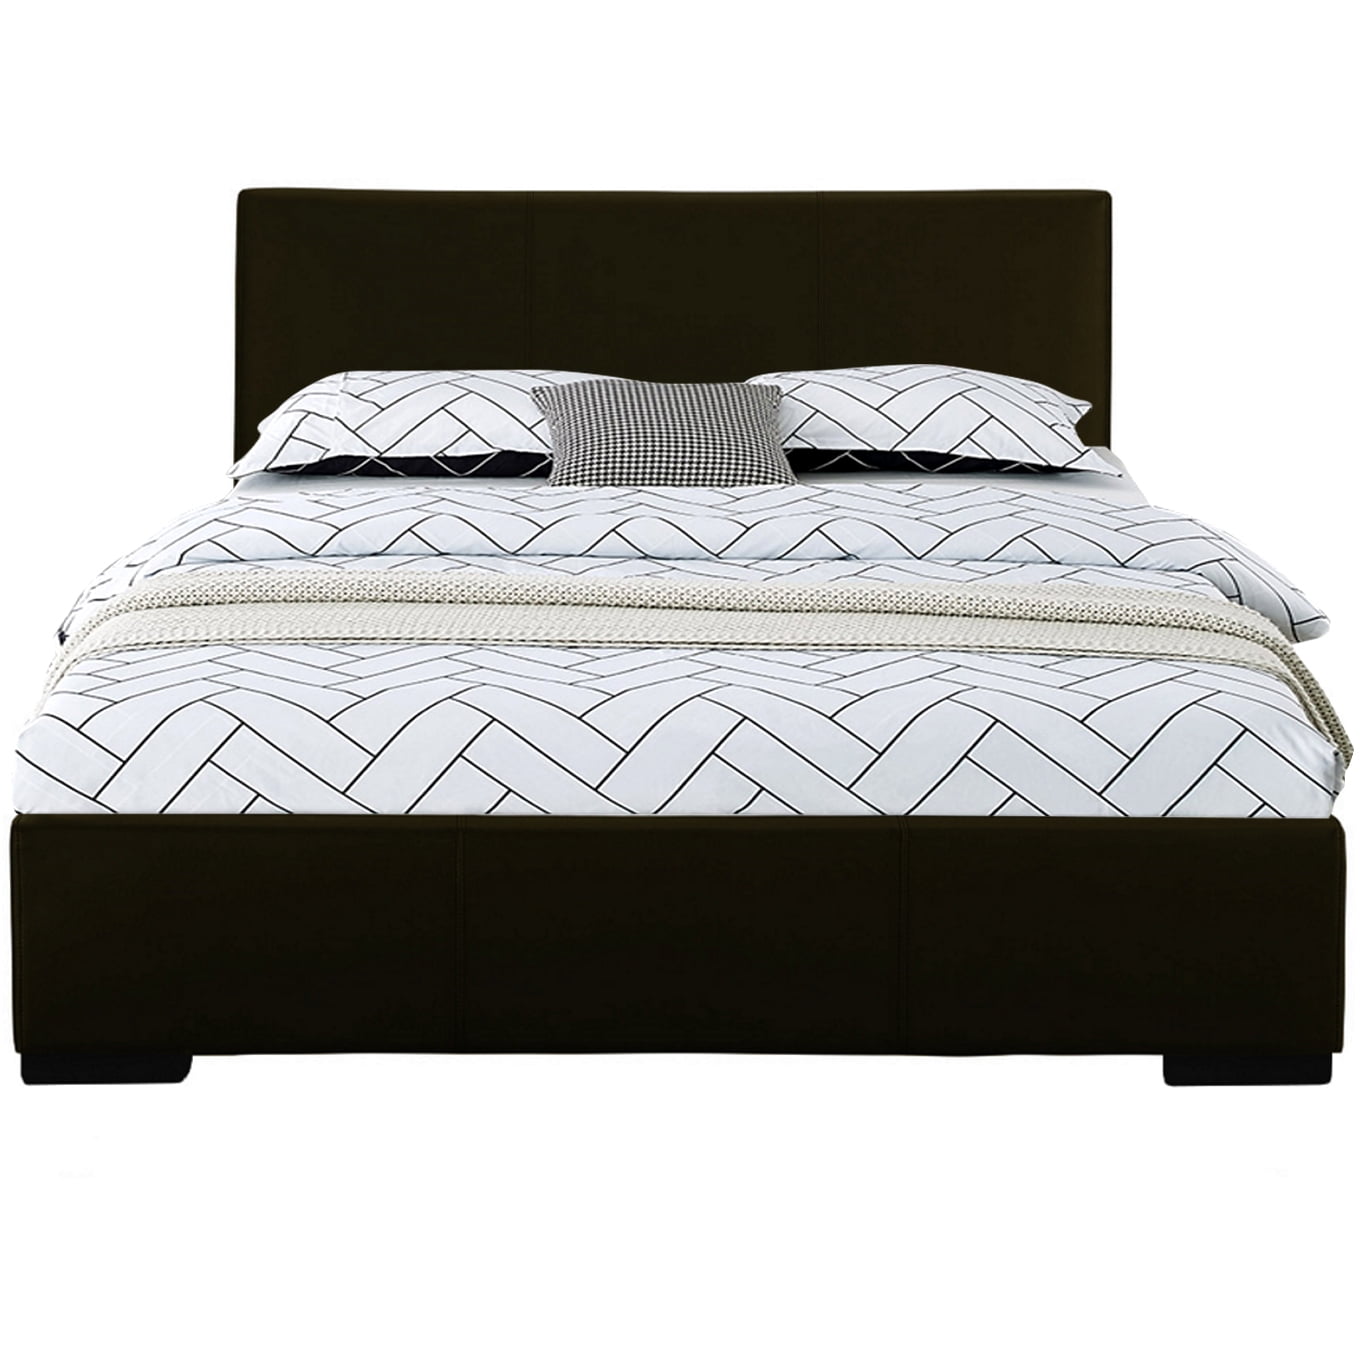 102130 Abbey Black Twin Size Bed